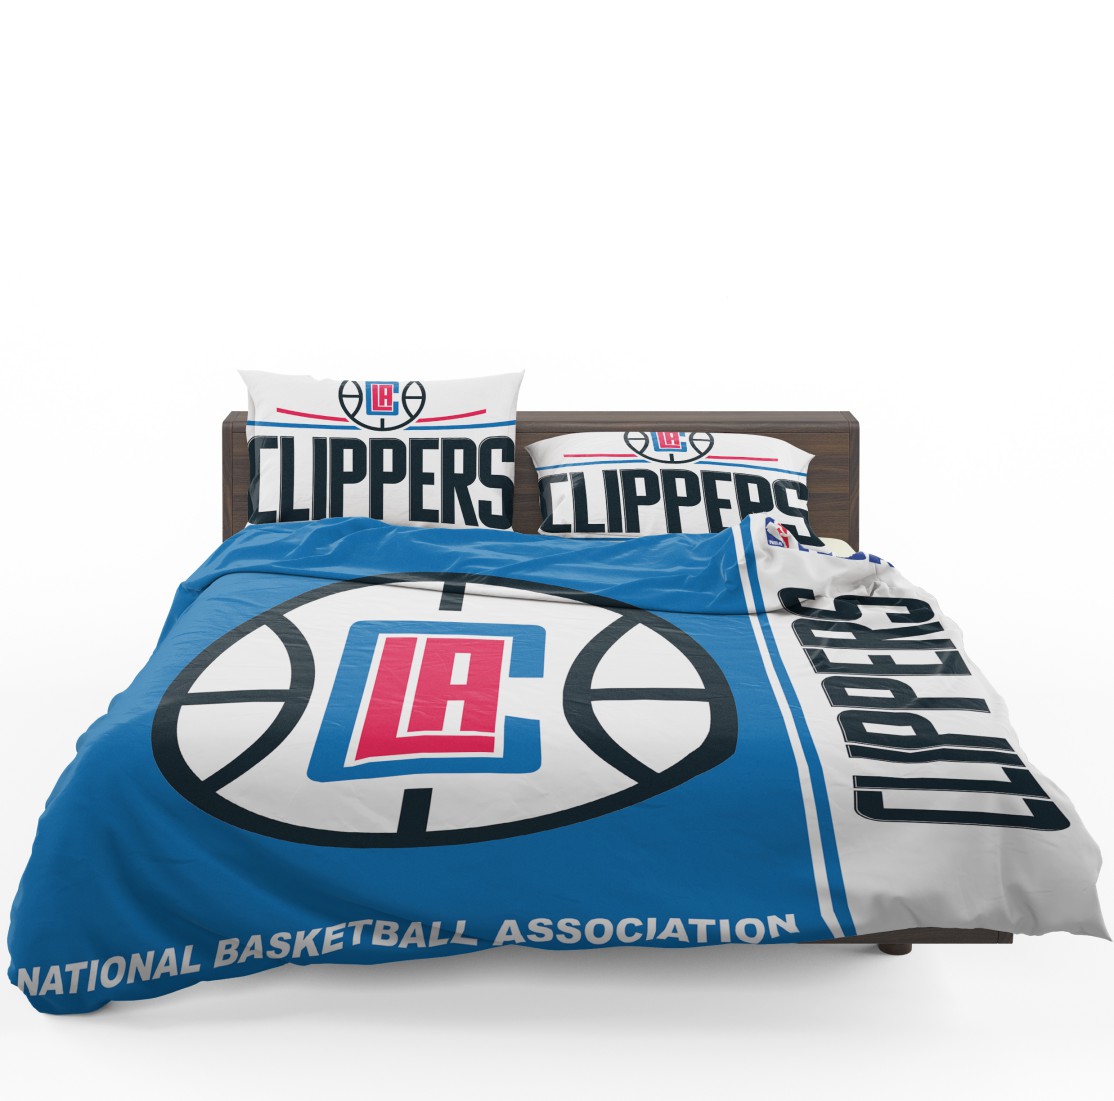 La Clippers Nba Basketball Bedding Set, Nba Twin Bed Sheets